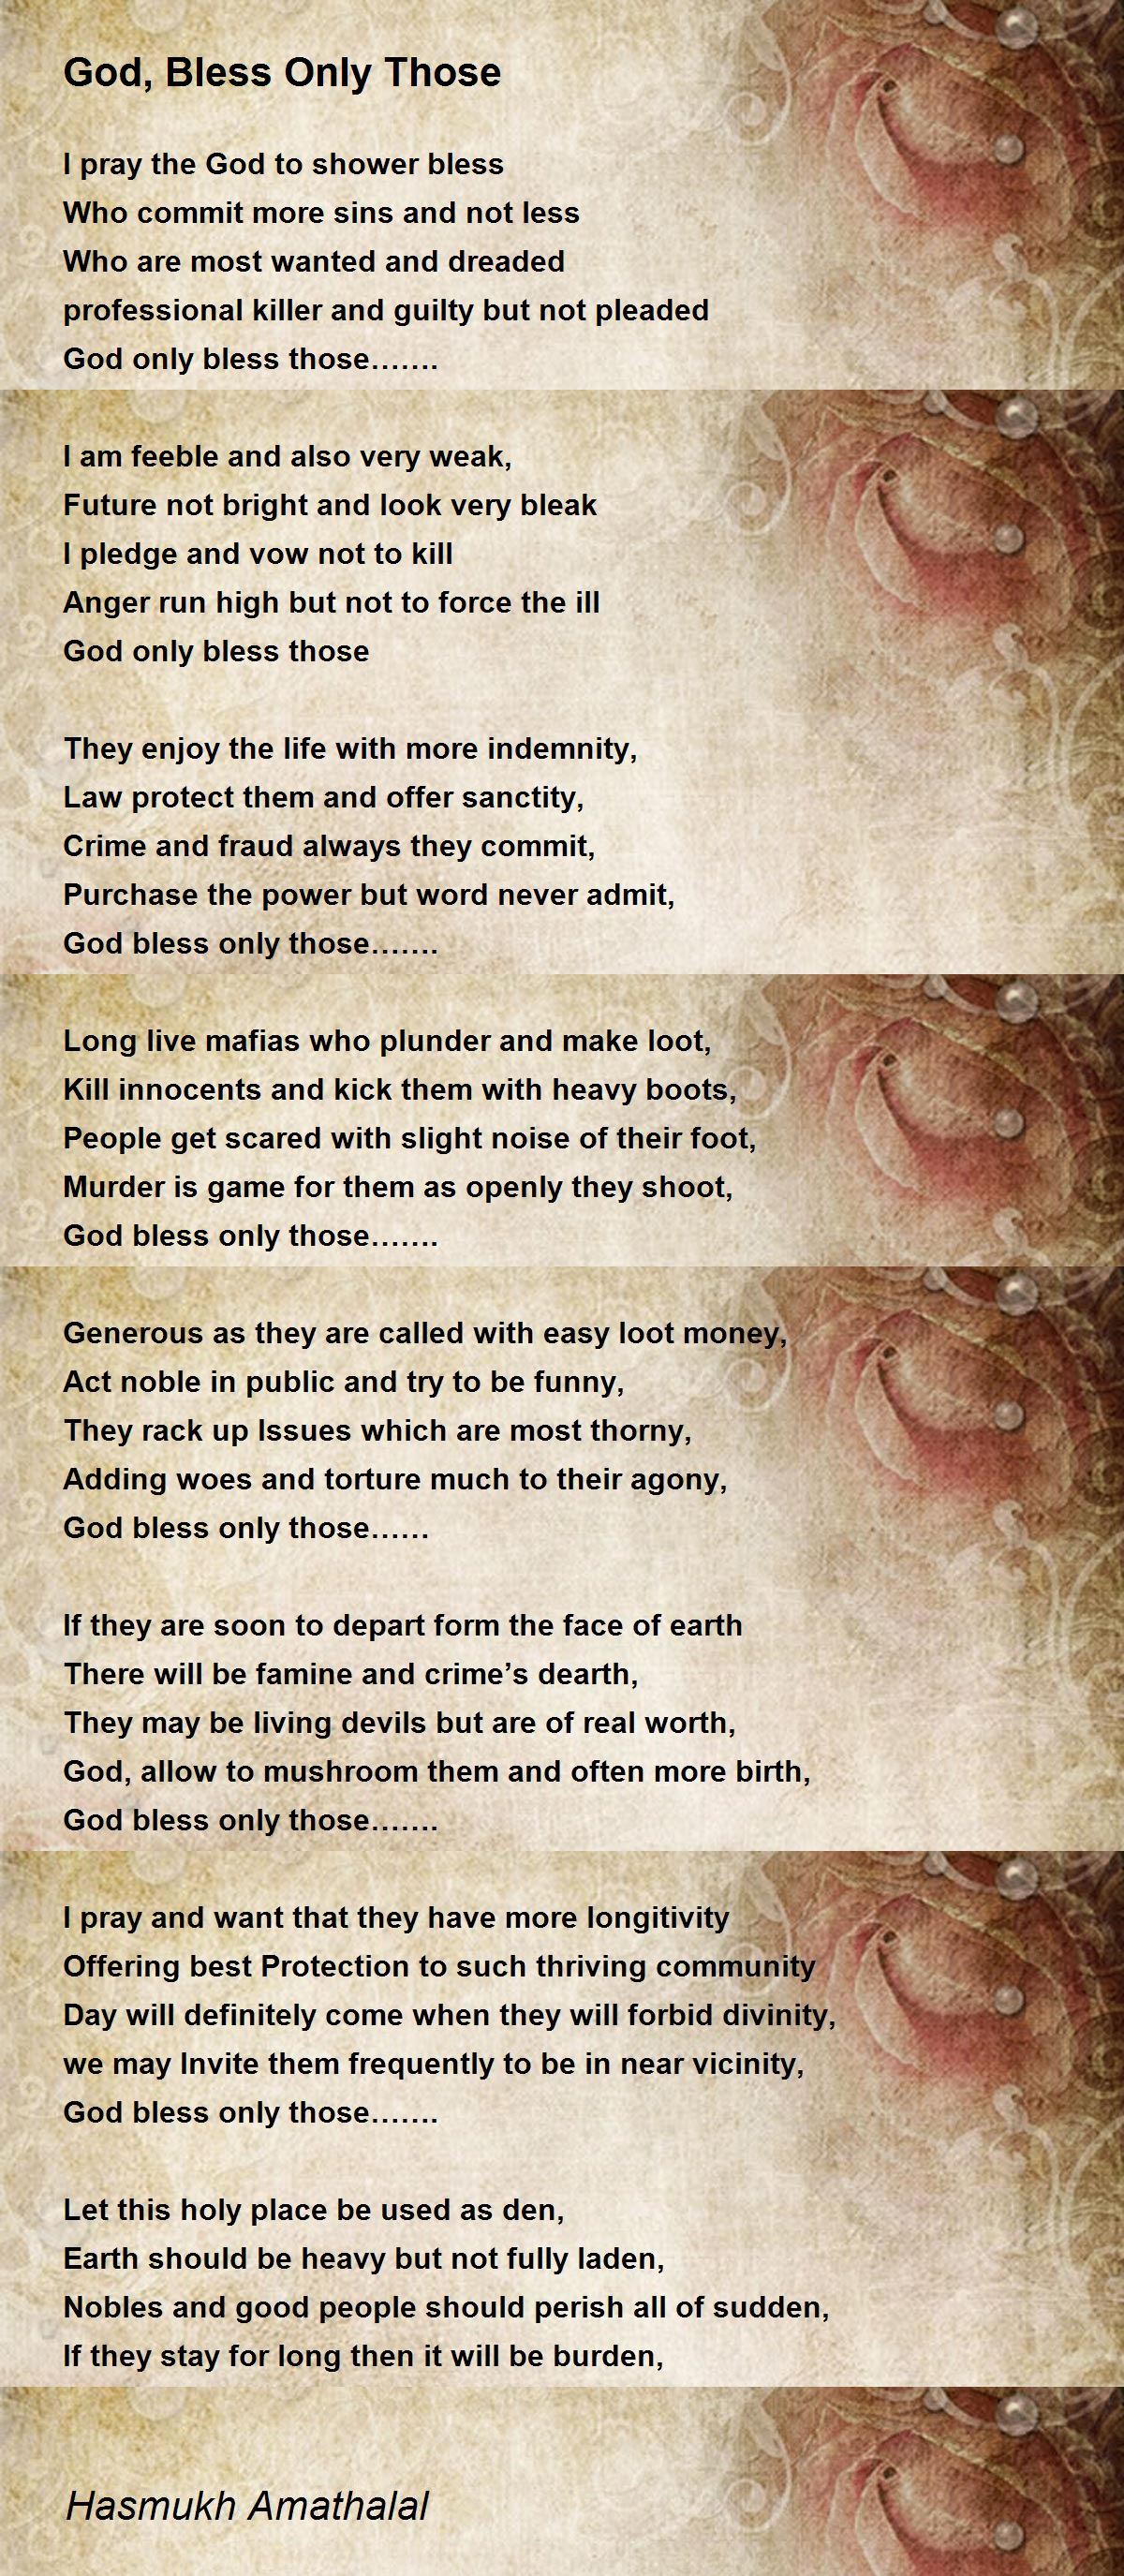 God, Bless Only Those Poem by Hasmukh Amathalal - Poem Hunter Comments